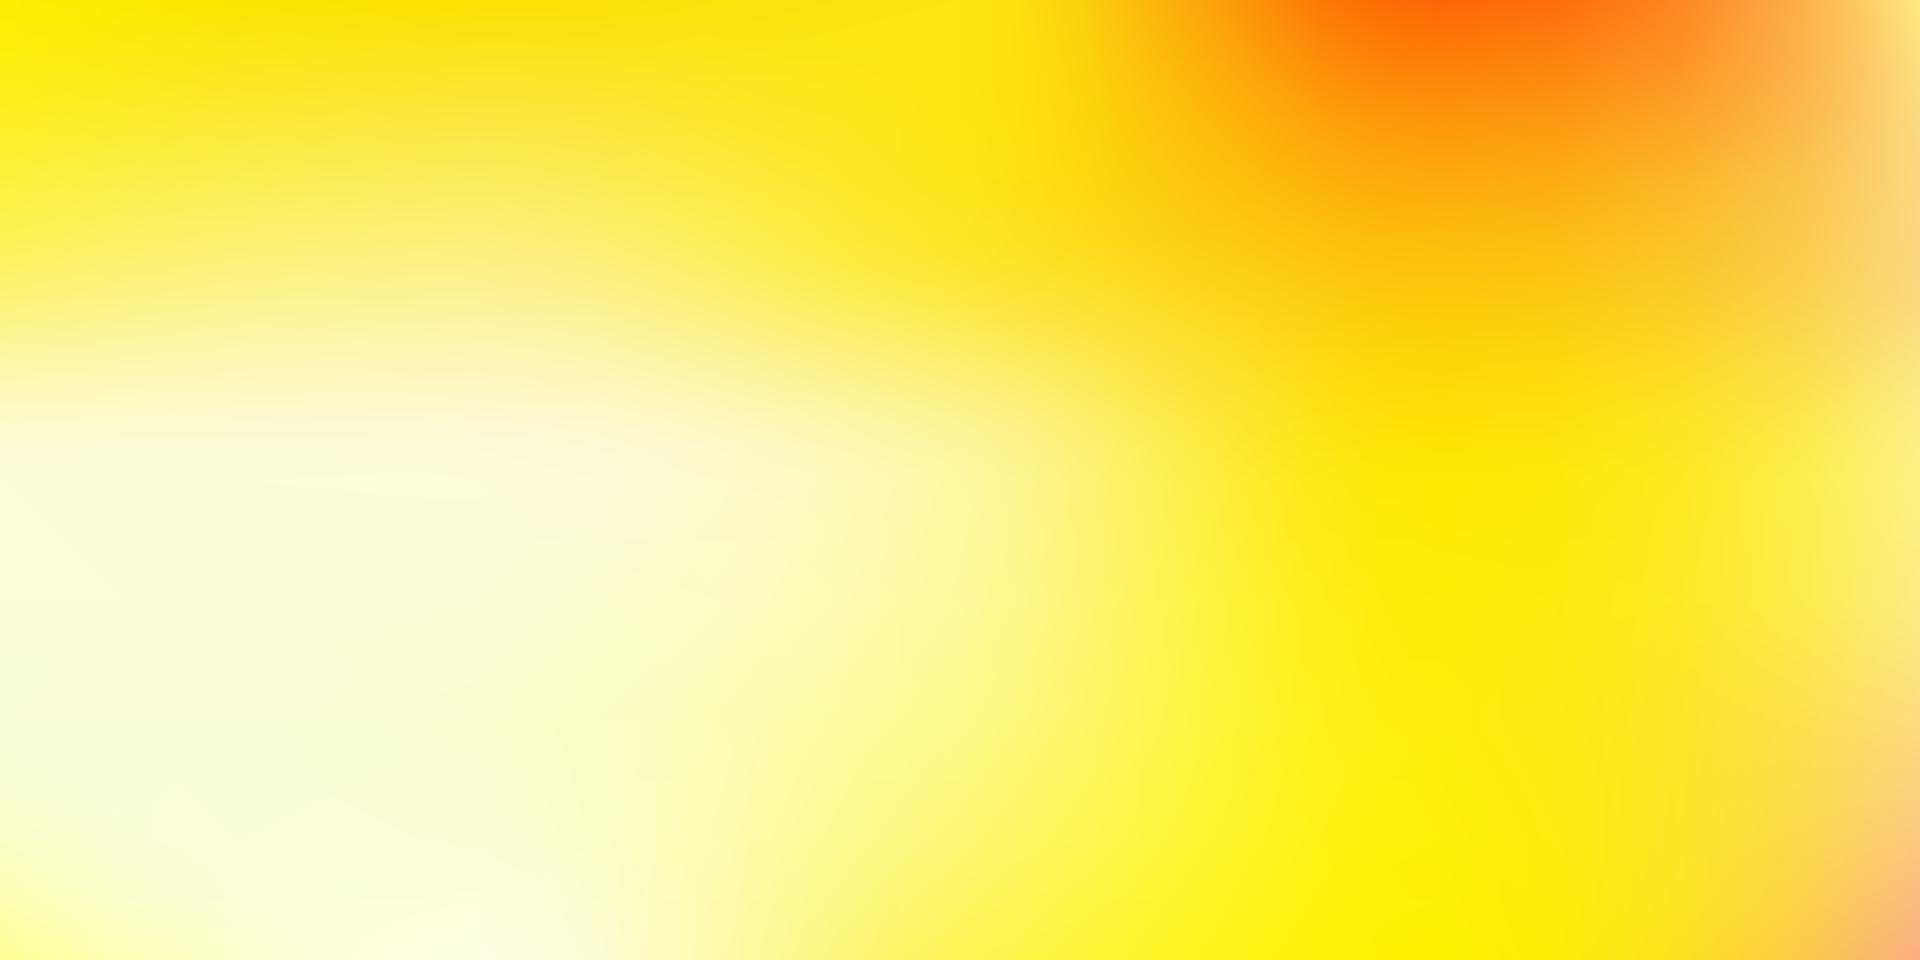 ljus orange vektor gradient oskärpa bakgrund.